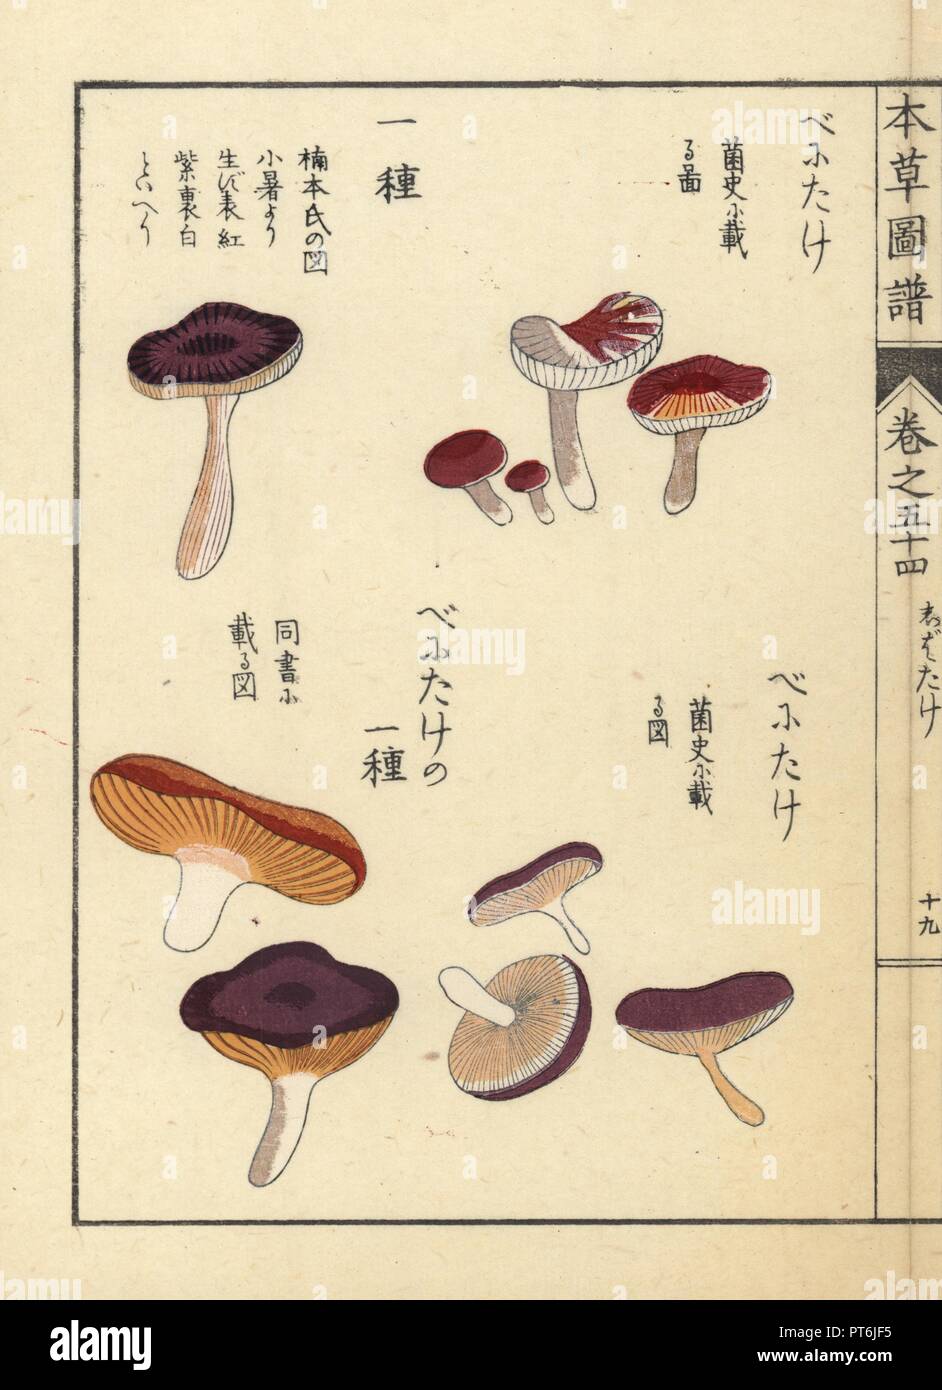 Benitake varieties and Russula fragilis mushrooms. Handcoloured woodblock print from Iwasaki Kan'en's 'Honzo Zufu' (Illustrated Guide to Plants), Japan, 1916. Stock Photo